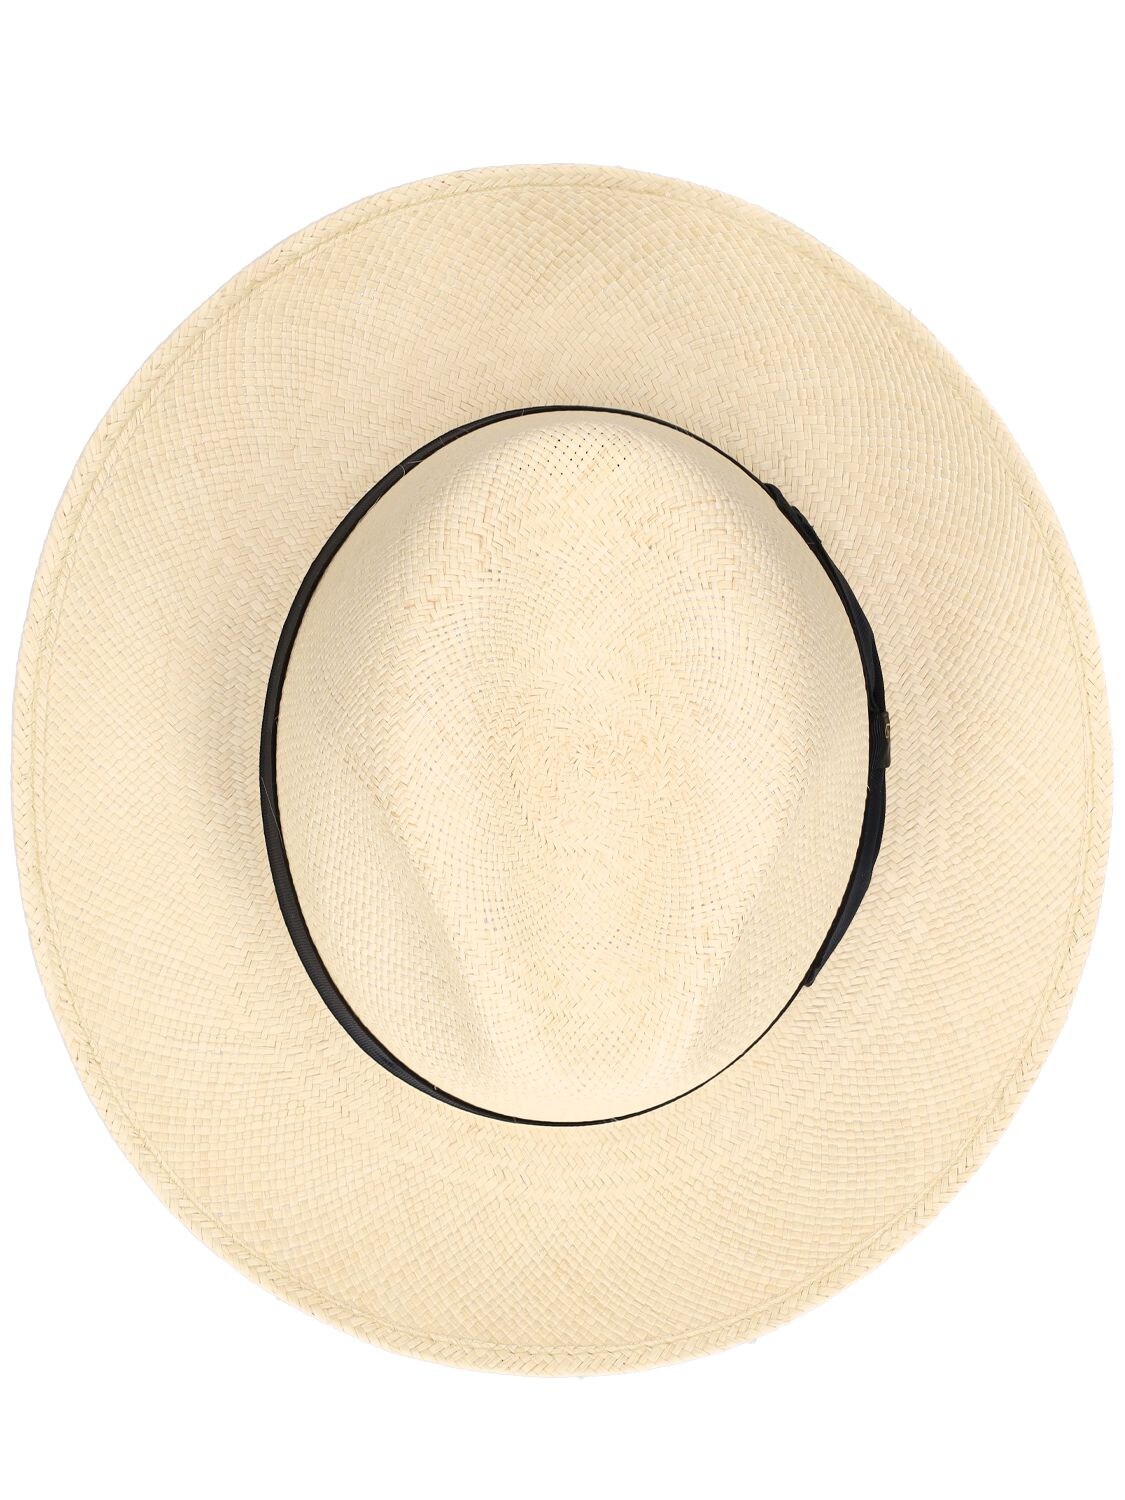 Shop Borsalino Amedeo 7.5cm Brim Straw Panama Hat In Natural,black